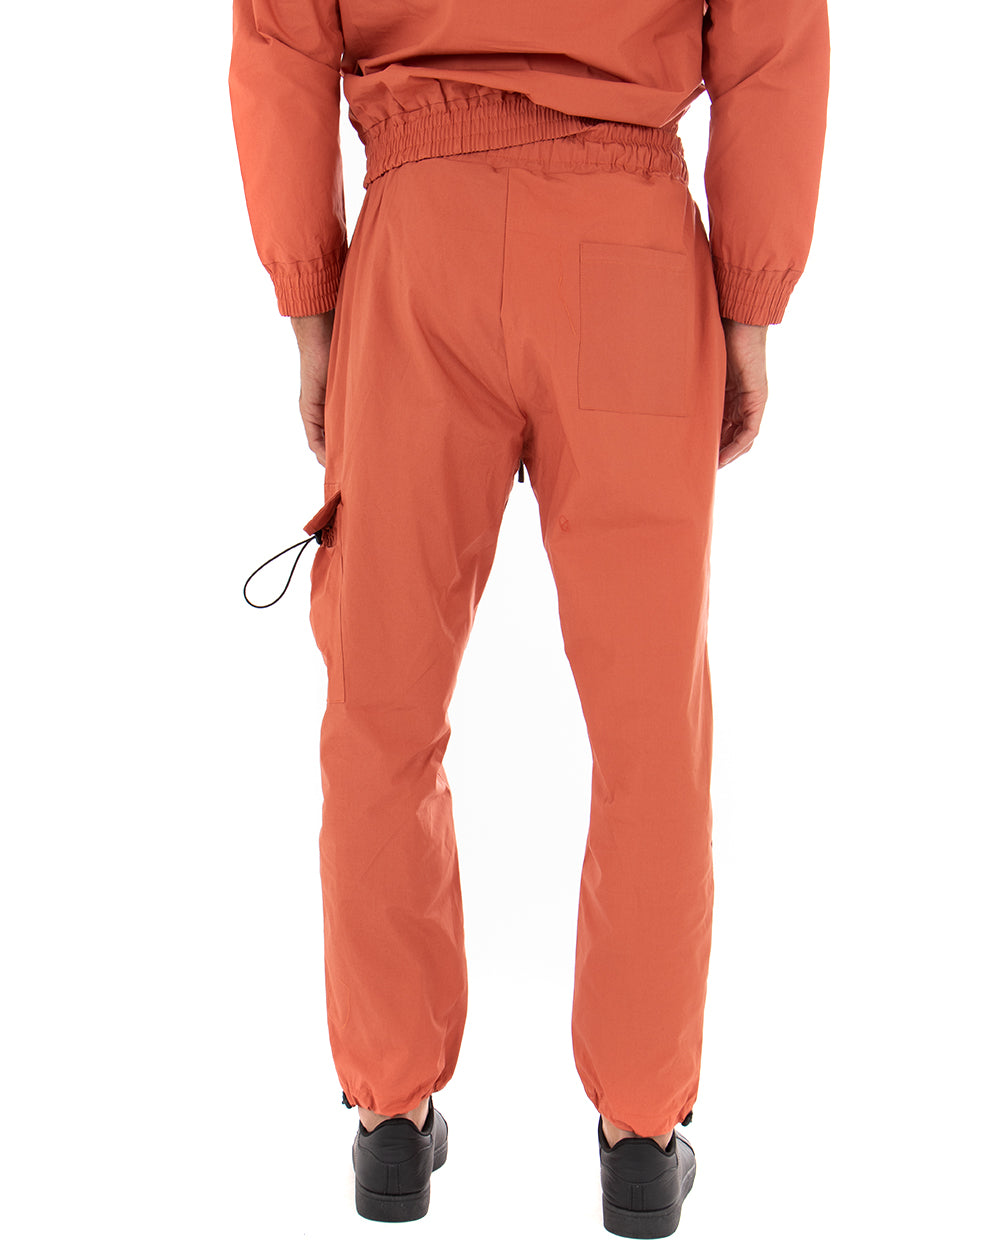 GIOSAL Men's Solid Color Orange Cargo Drawstring Tracksuit Pants